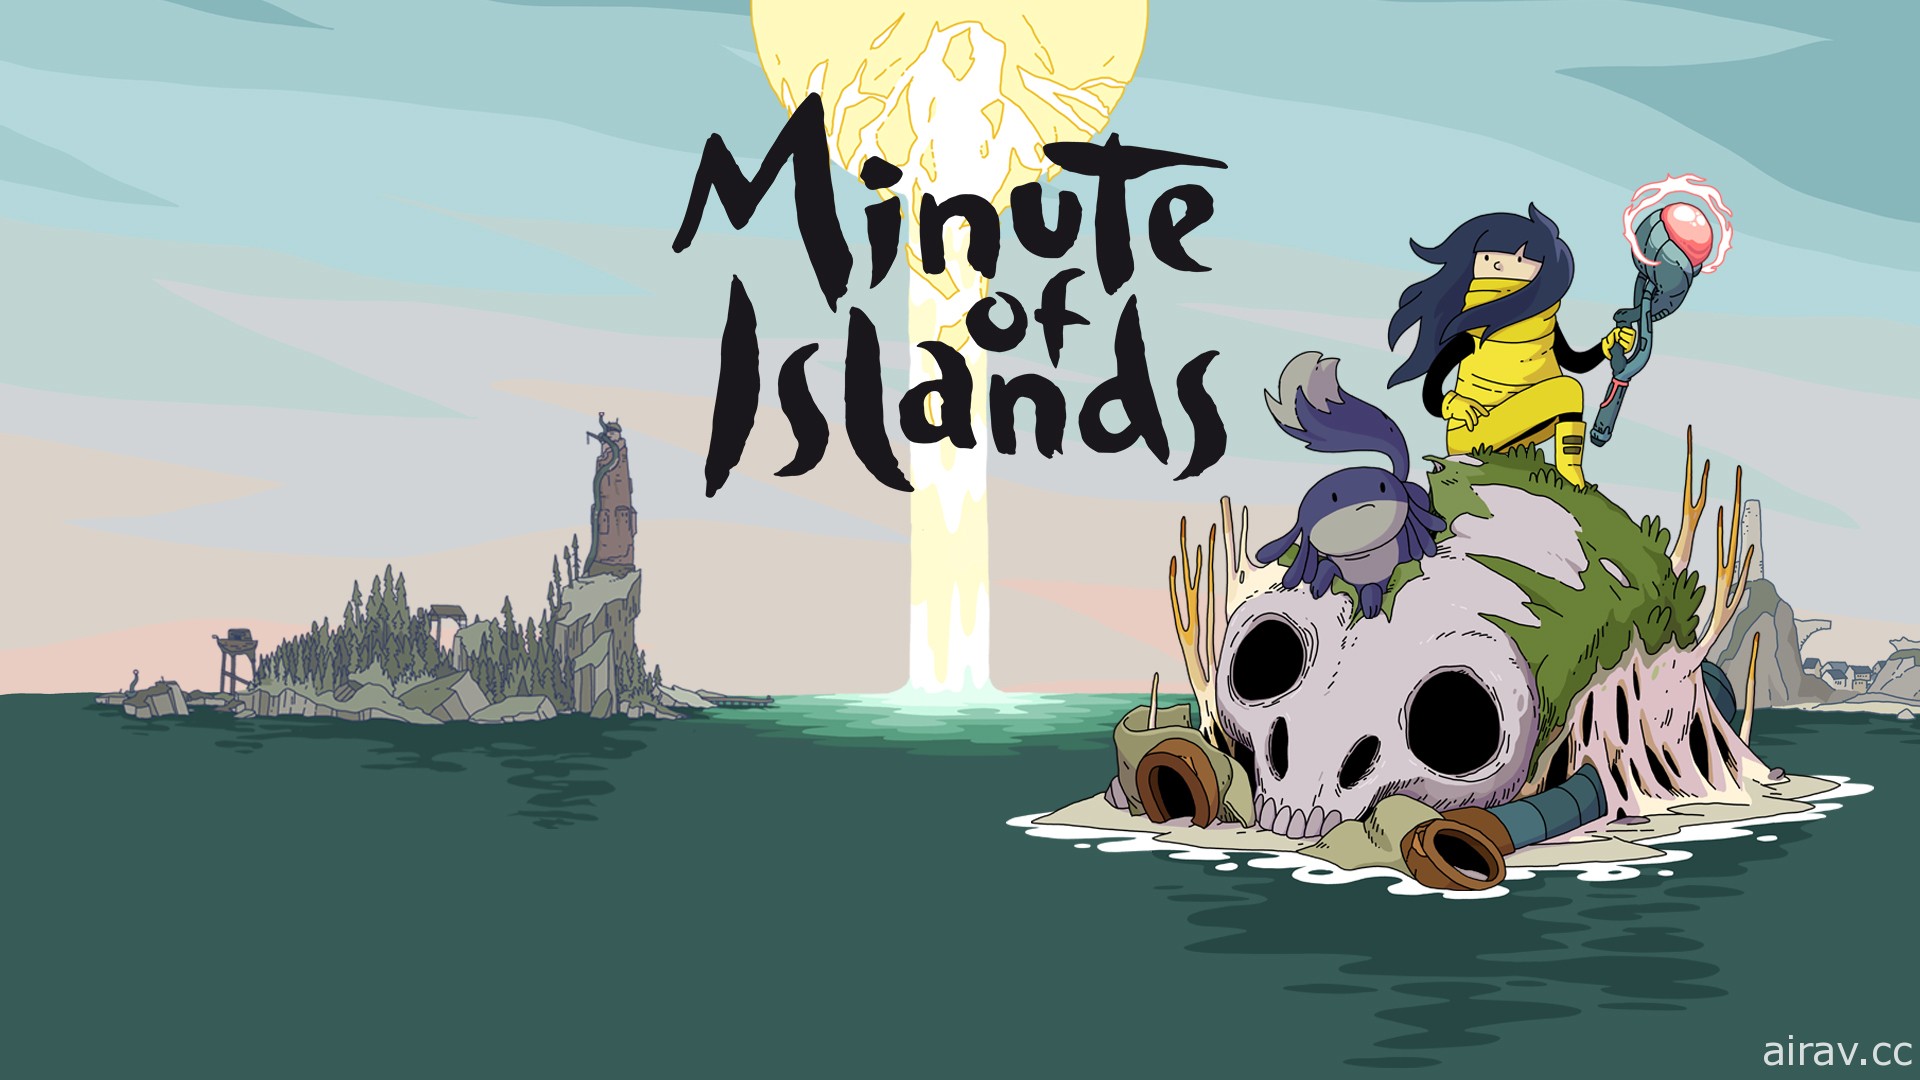 《Minute of Islands》Nintendo Switch 中文版今日正式上市